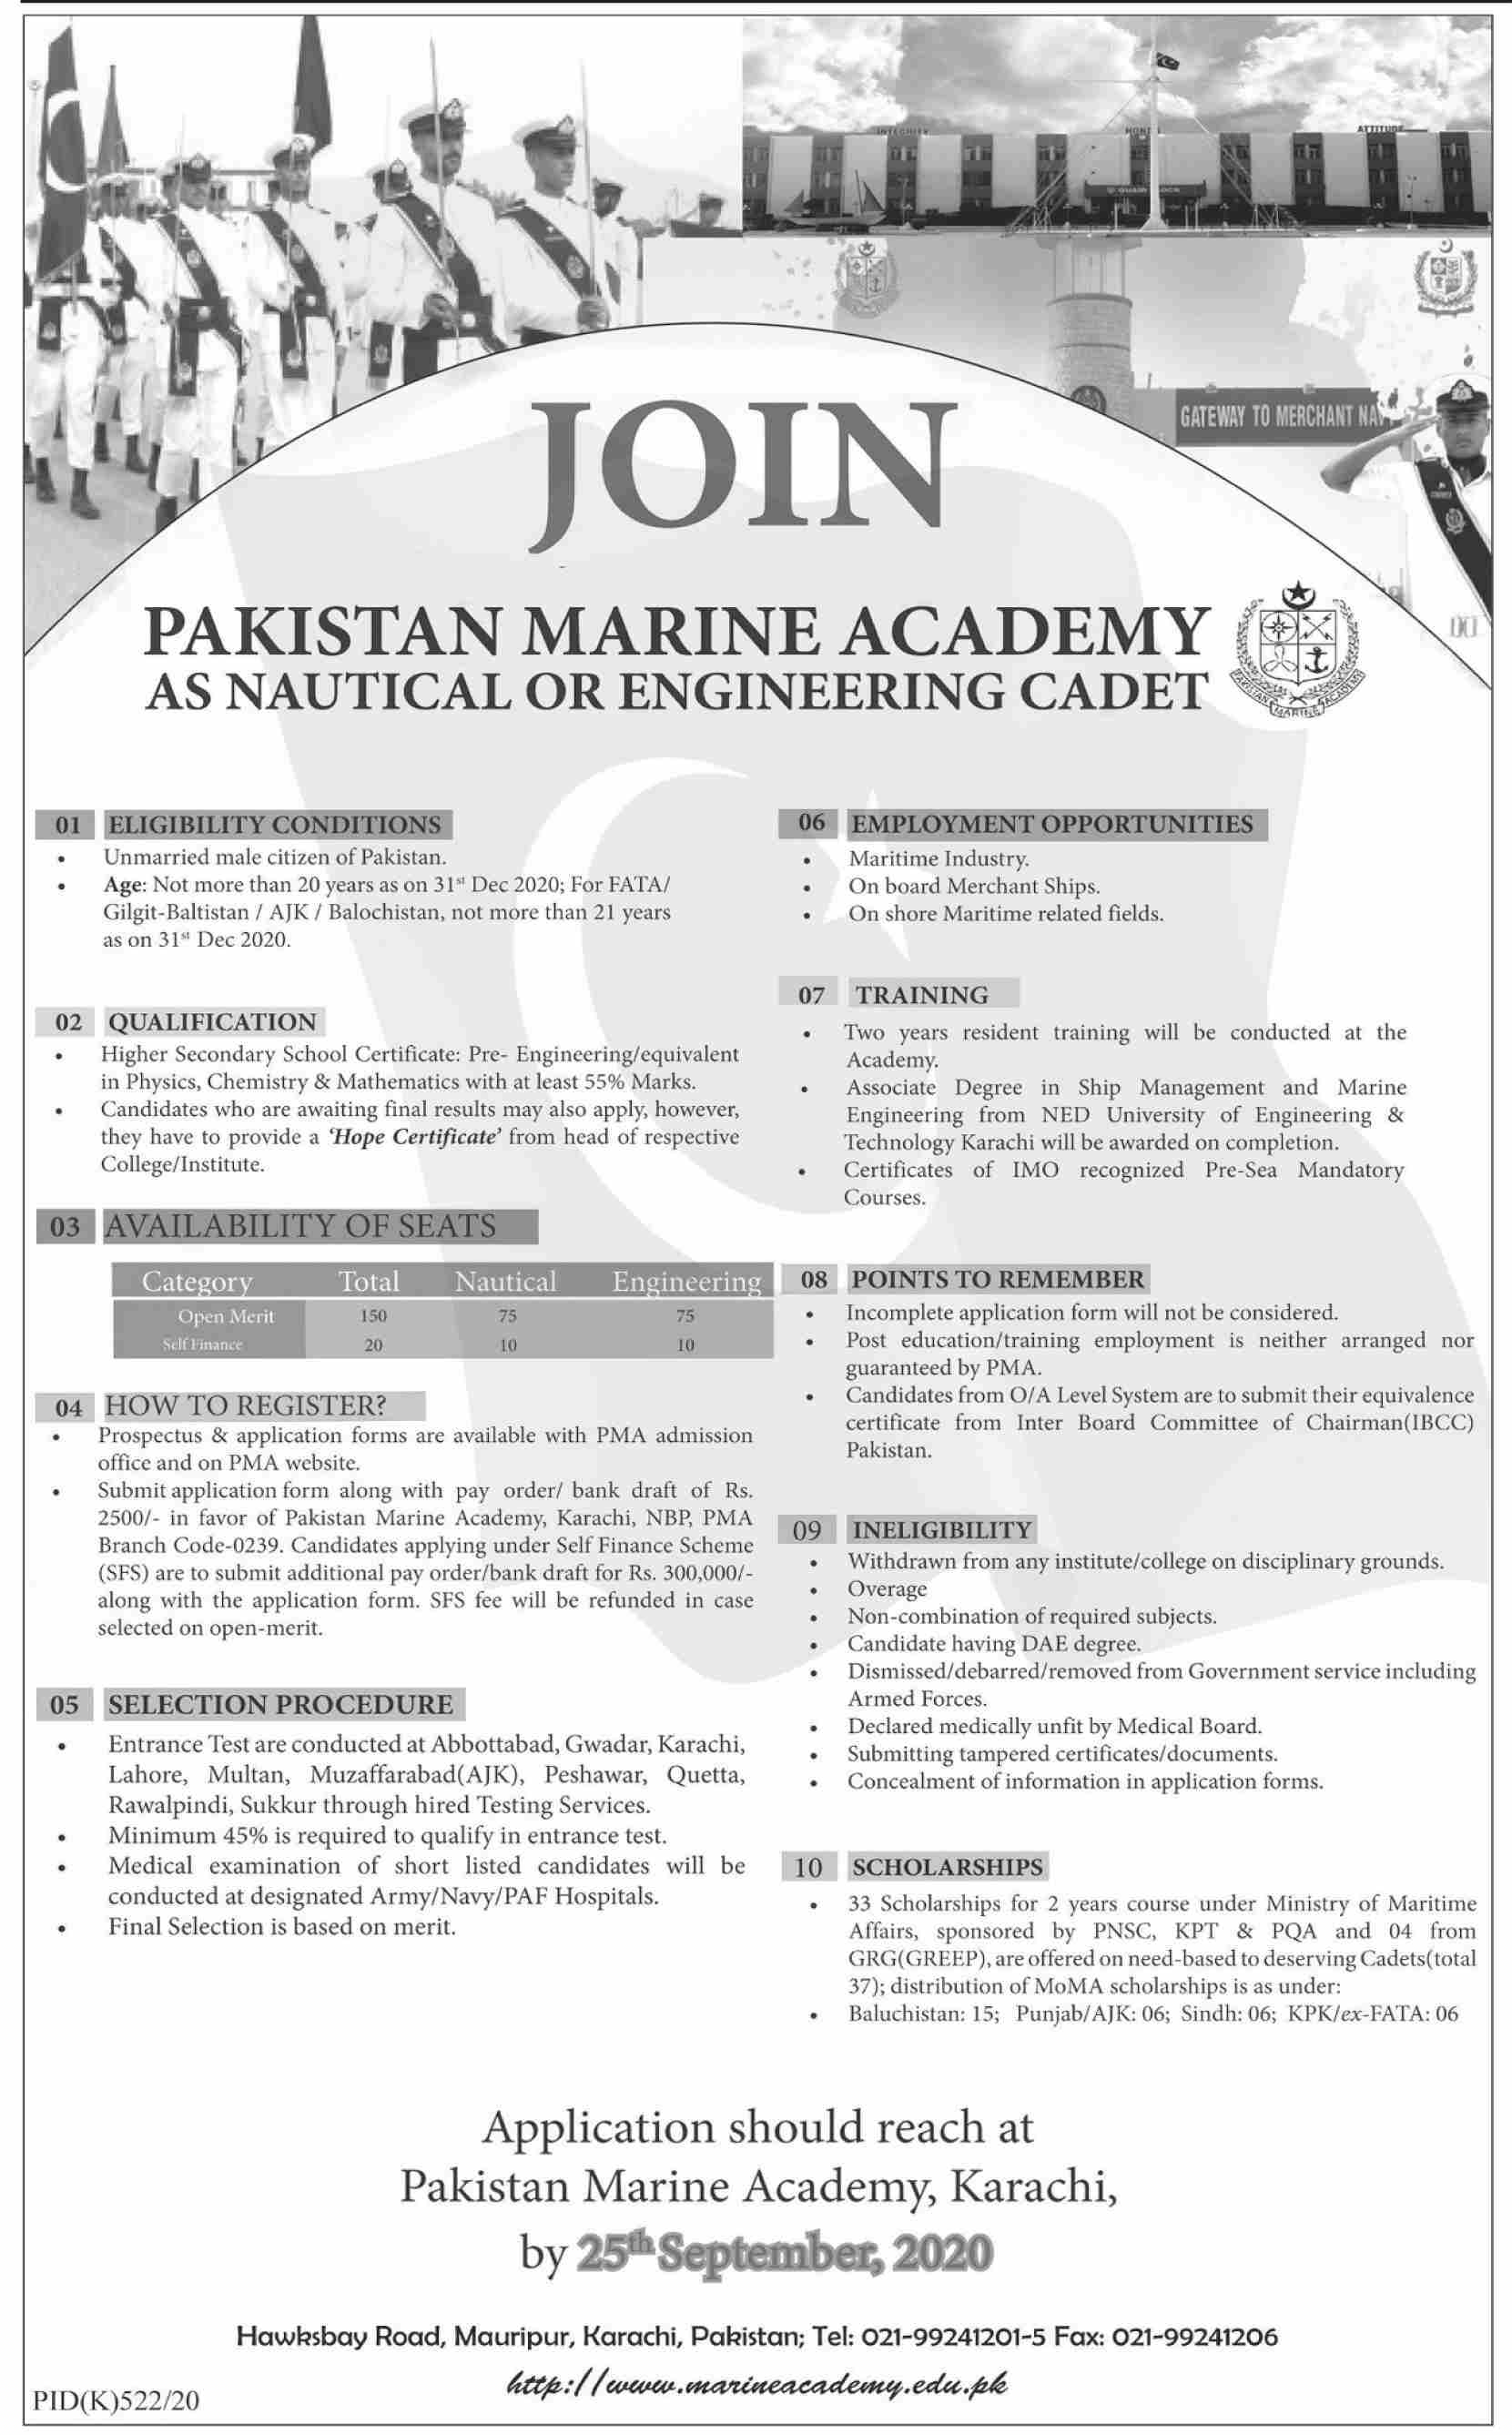  Pakistan Marine Academy Karachi Admission 2021 / 2022 Application Form PMA Join as Nautical / Engineering Cadet Latest